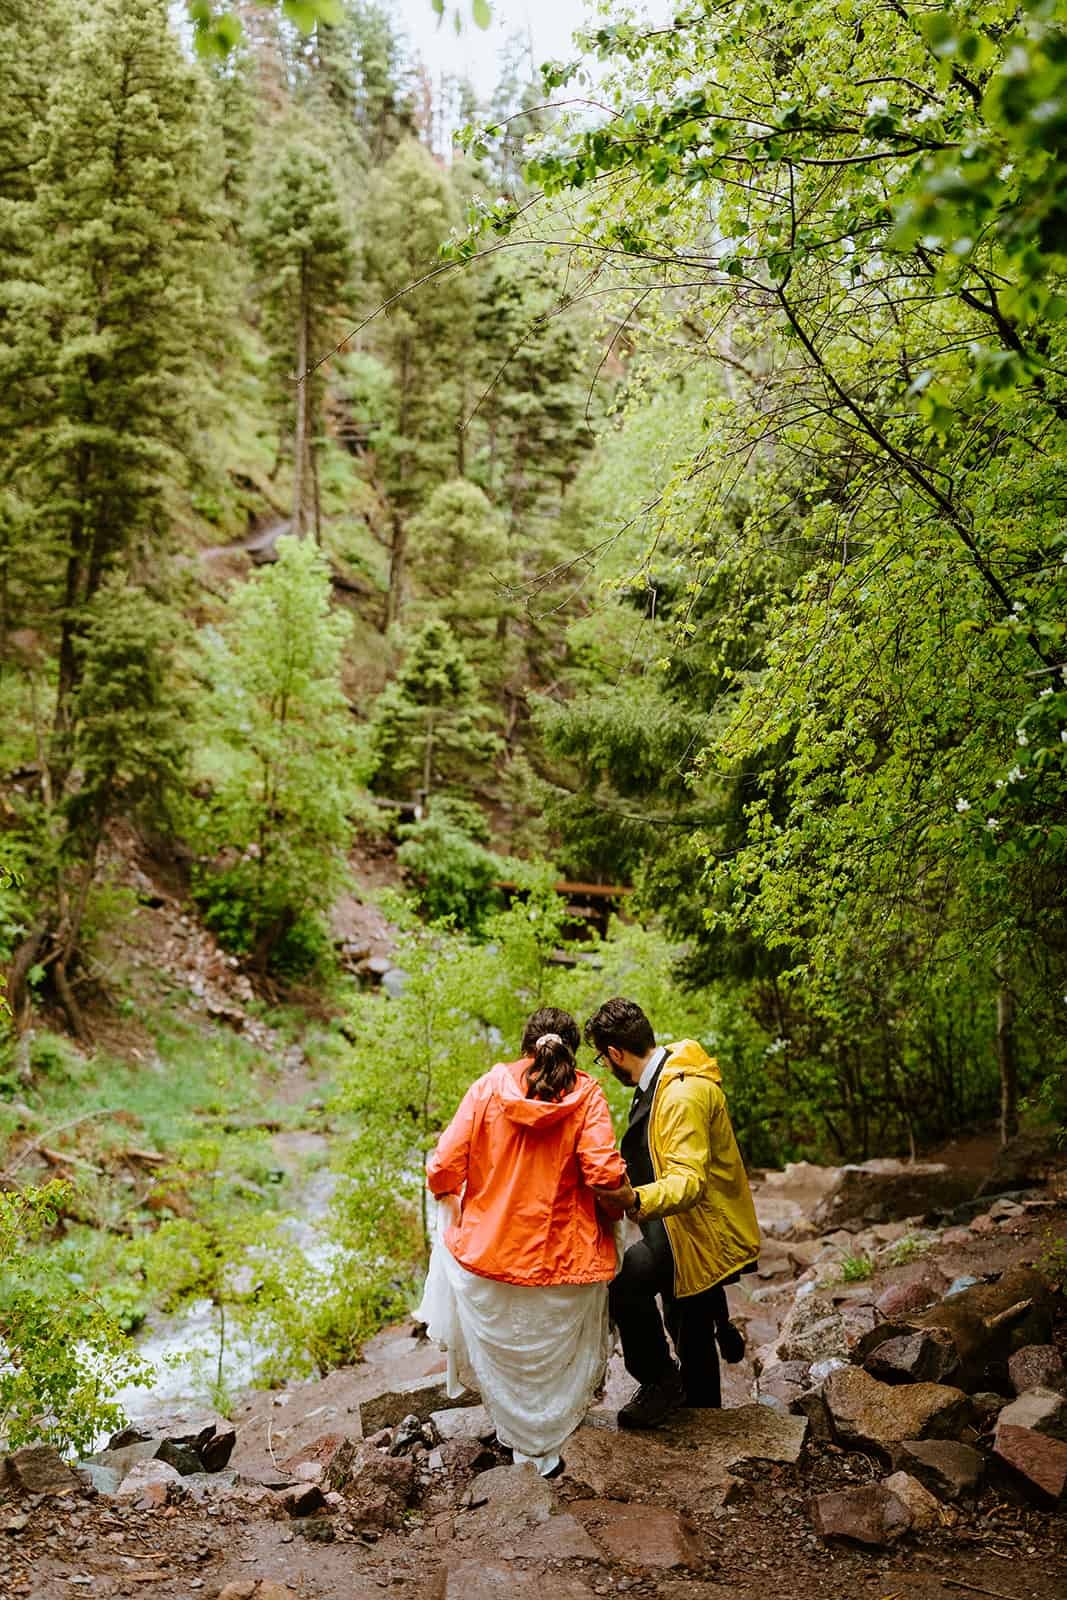 A man helps a woman walk down a rocky trail in the San Juan mountains